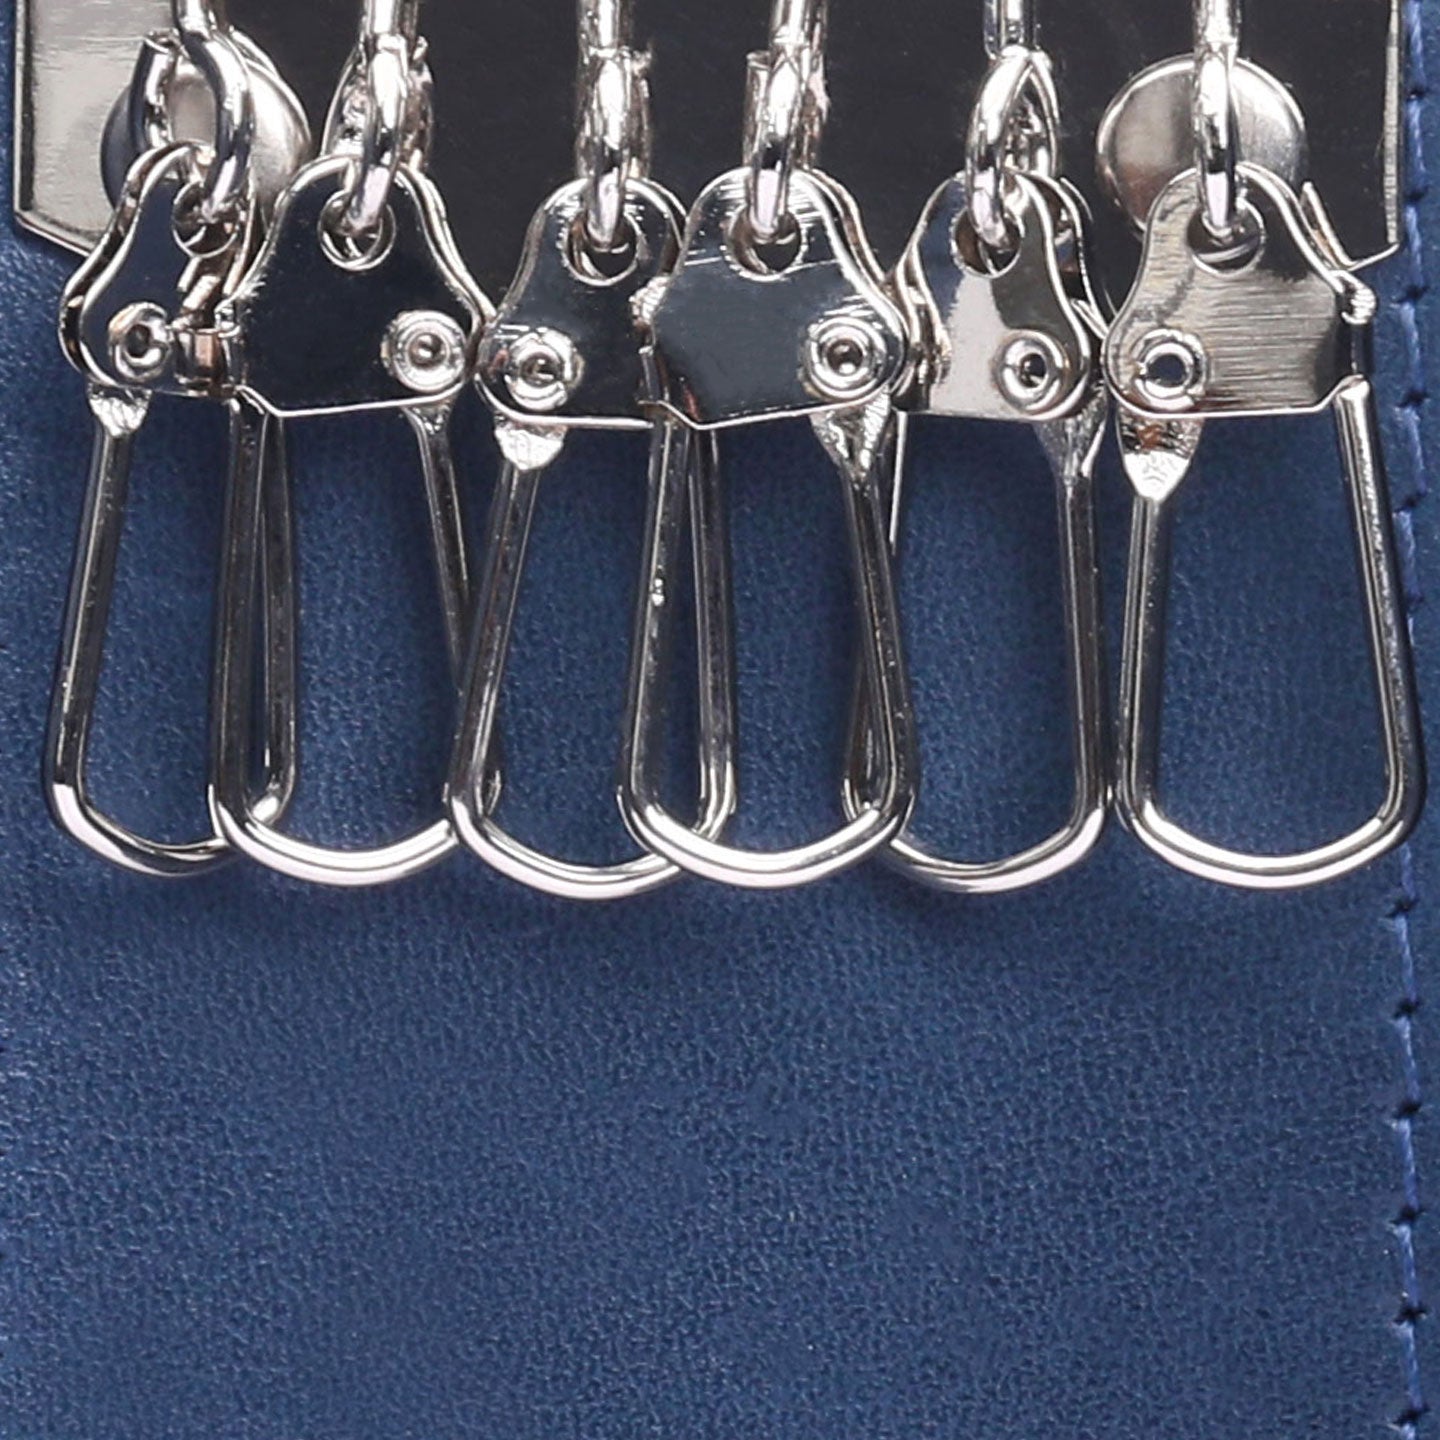 Blue leather key case